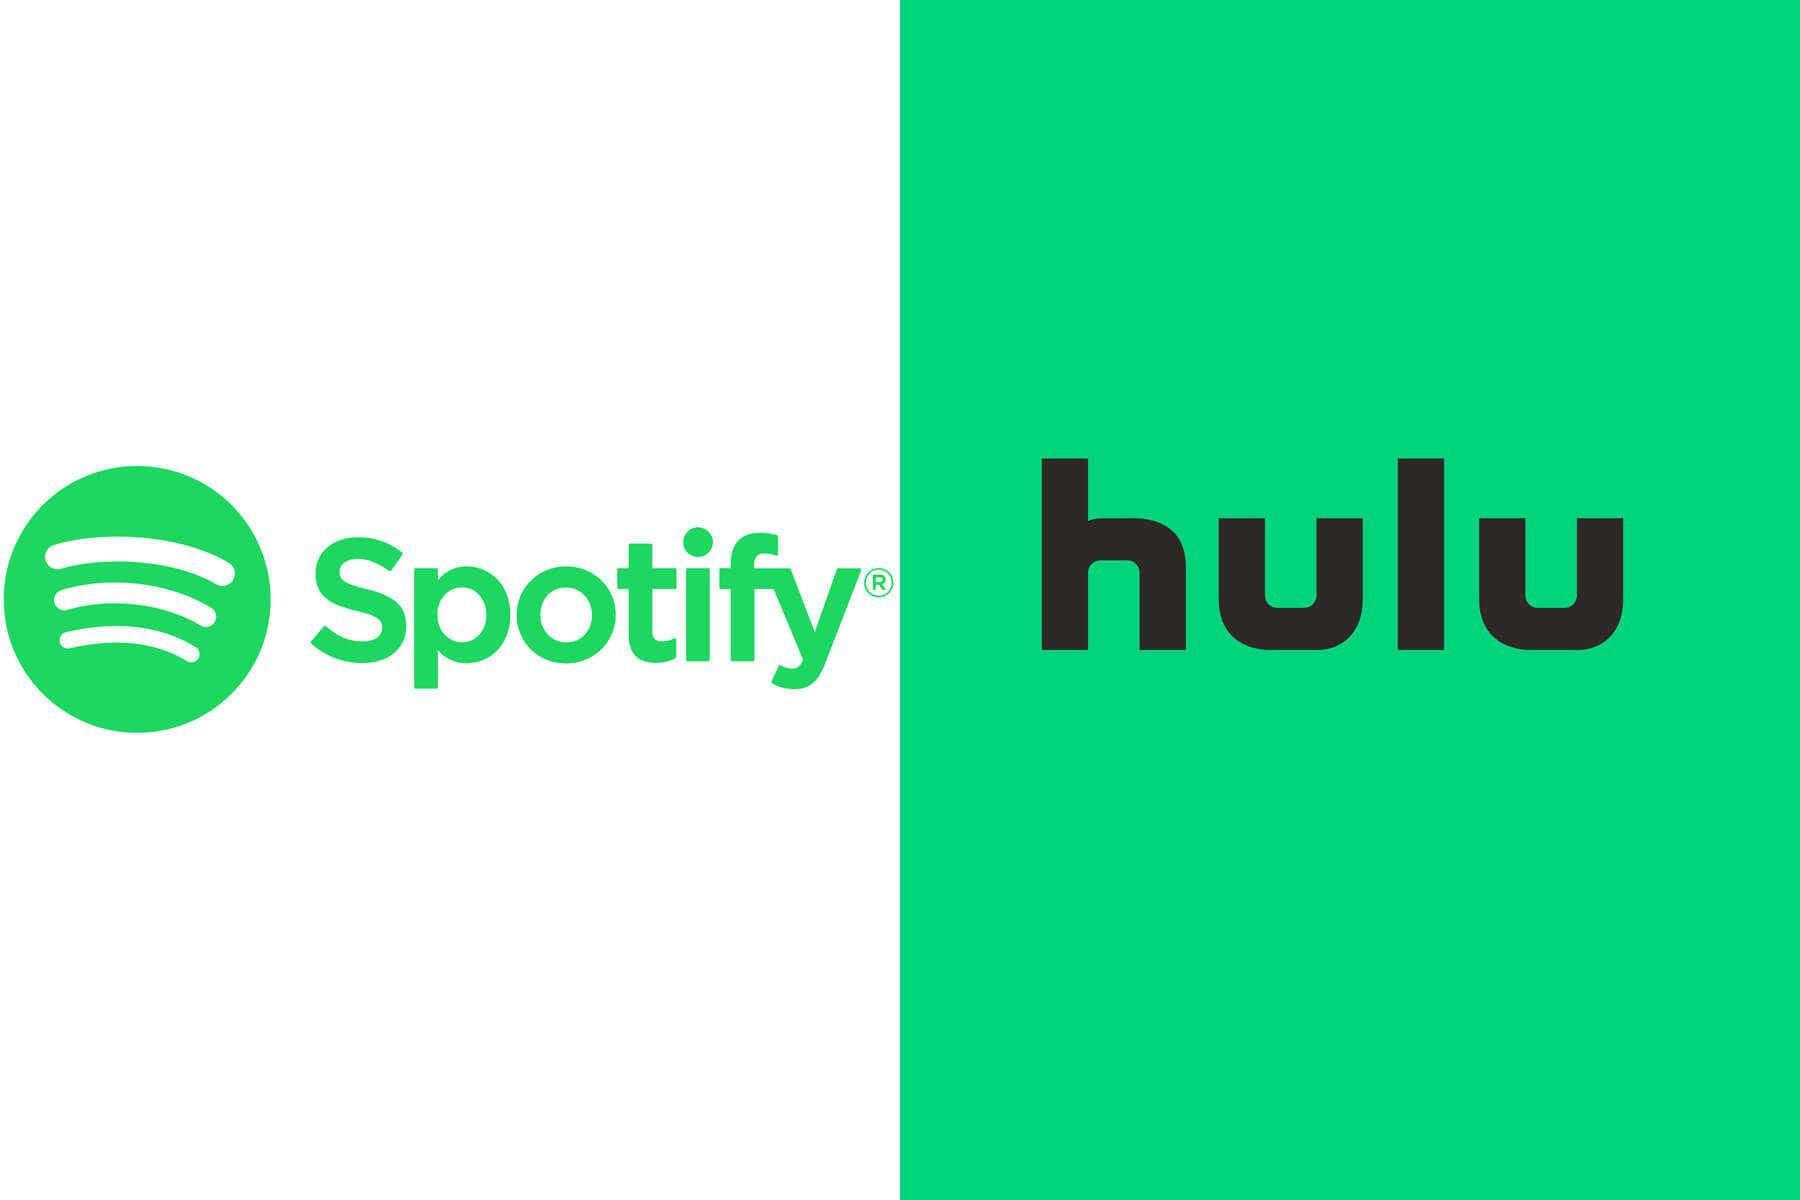 Пакет Spotify и Hulu